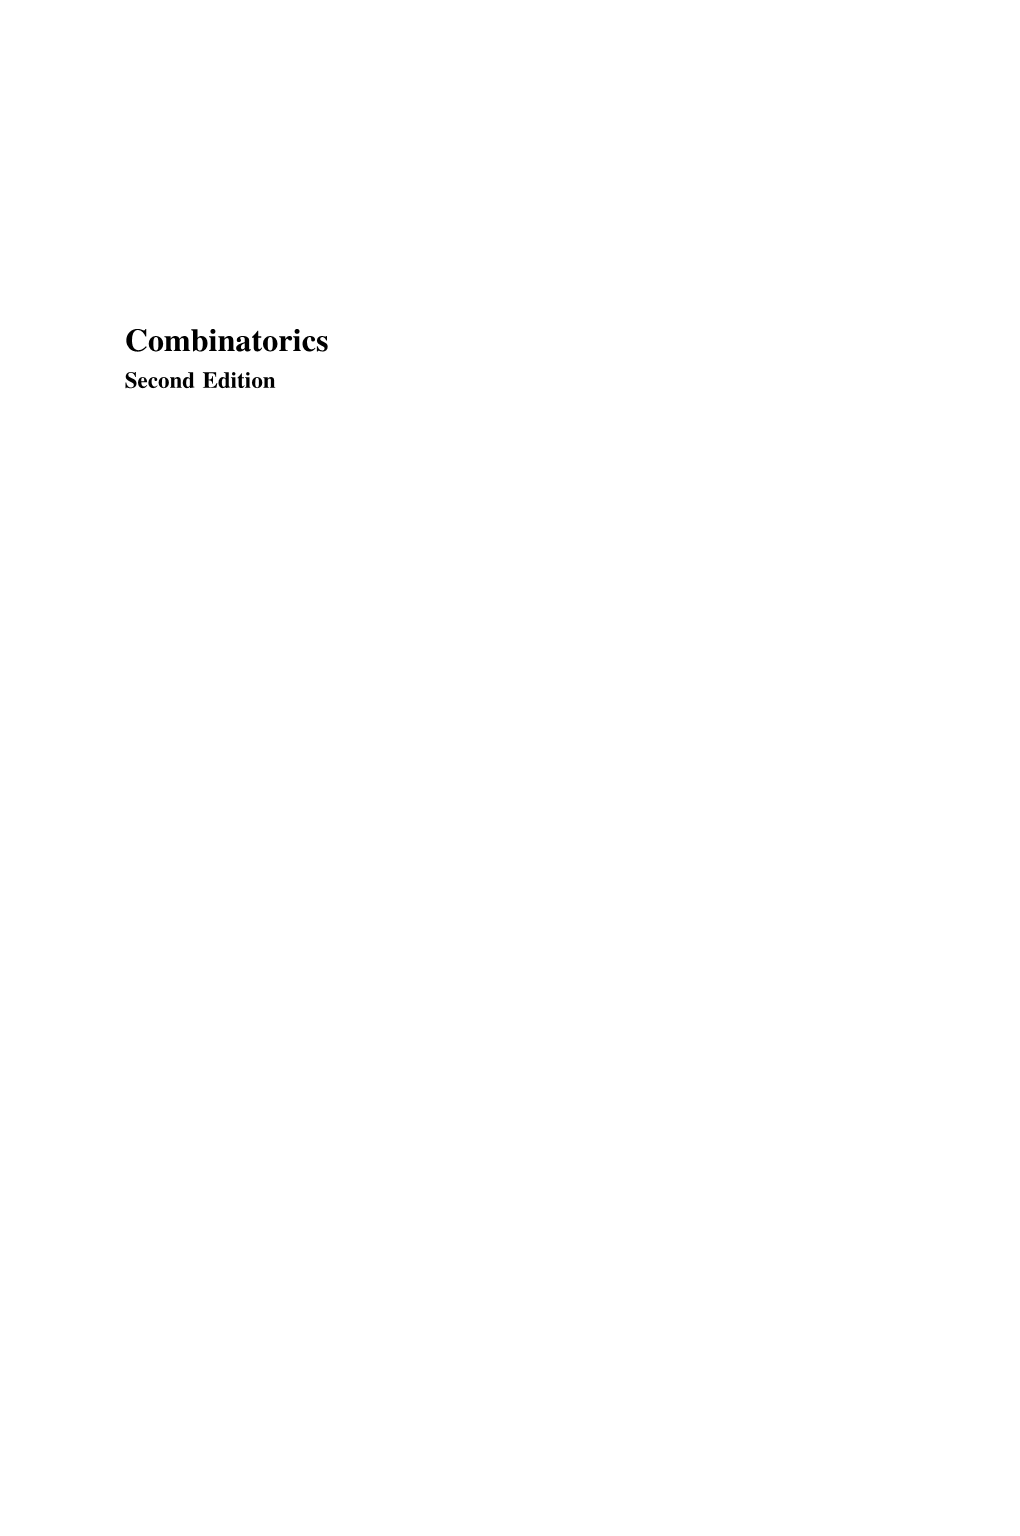 Merris R. Combinatorics (2Ed., Wiley, 2003)(ISBN 047126296X)(560S).Pdf